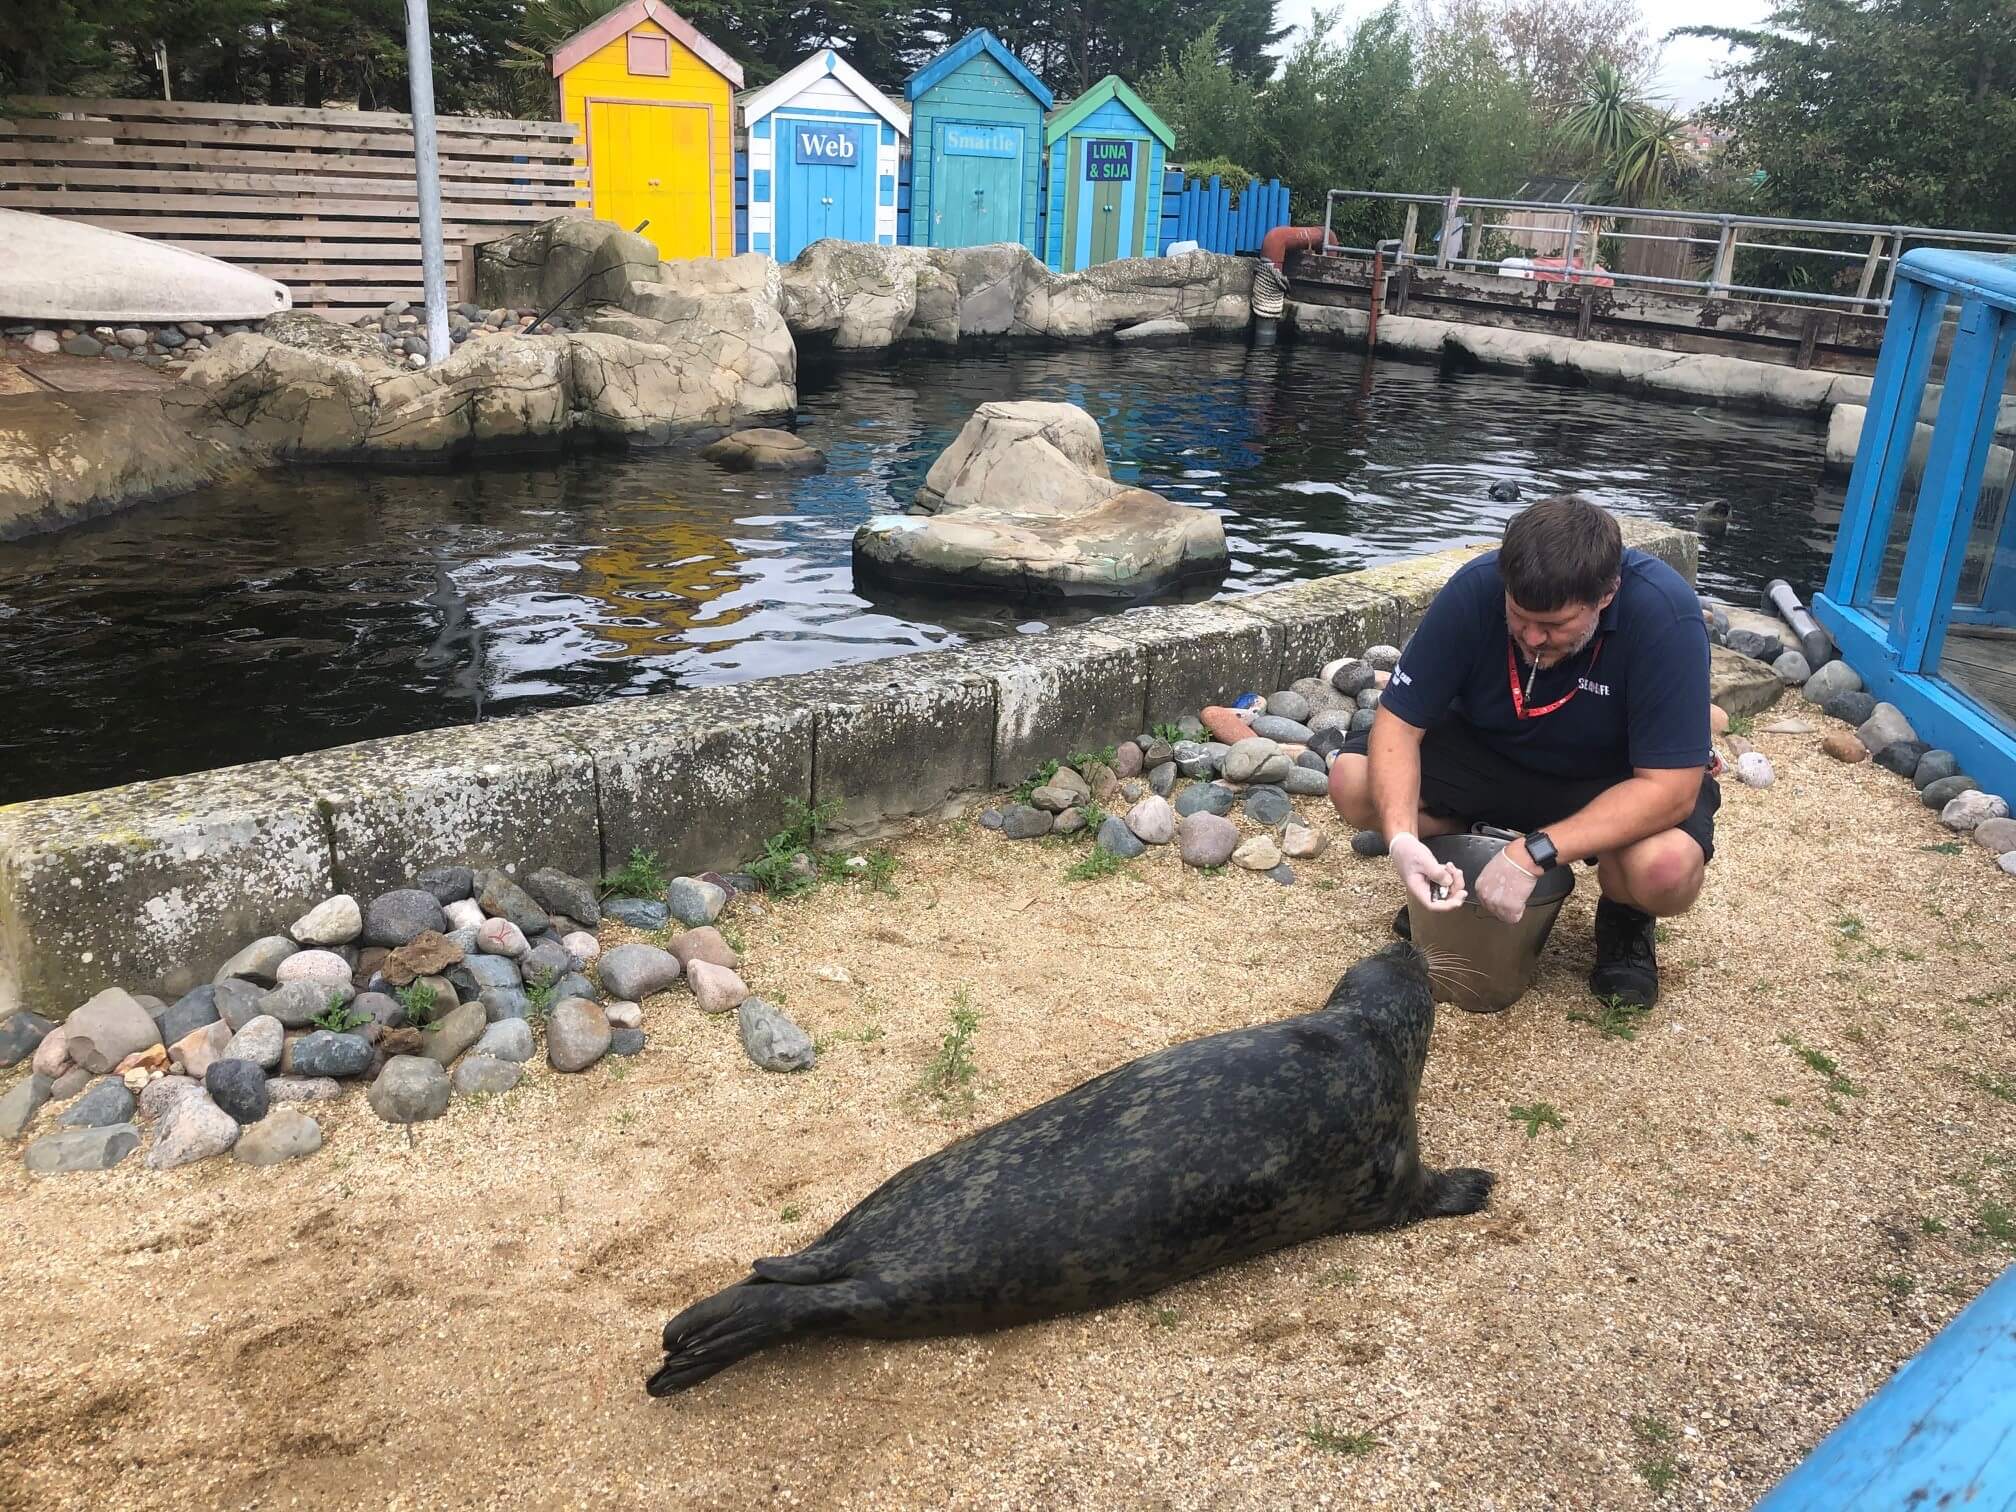 Feeding seals at Weymouth SEA LIFE Adventure Park